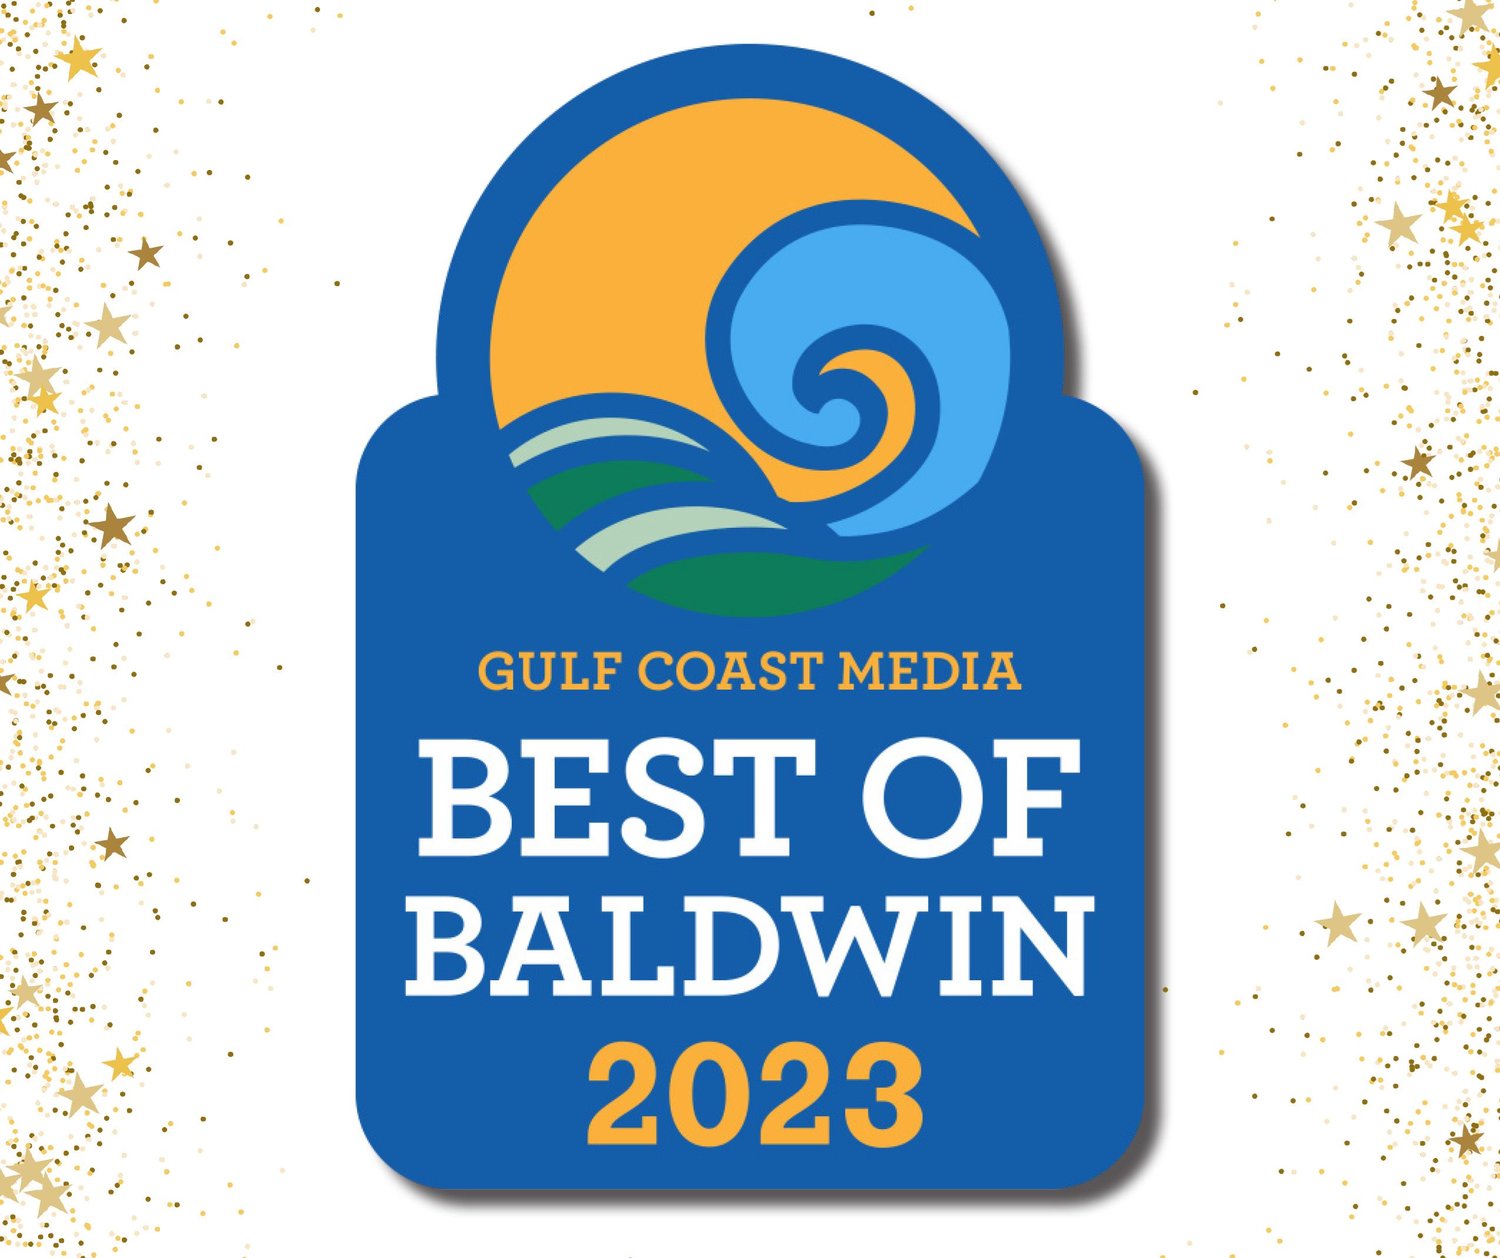 Nominations open for Best of Baldwin 2023 Gulf Coast Media